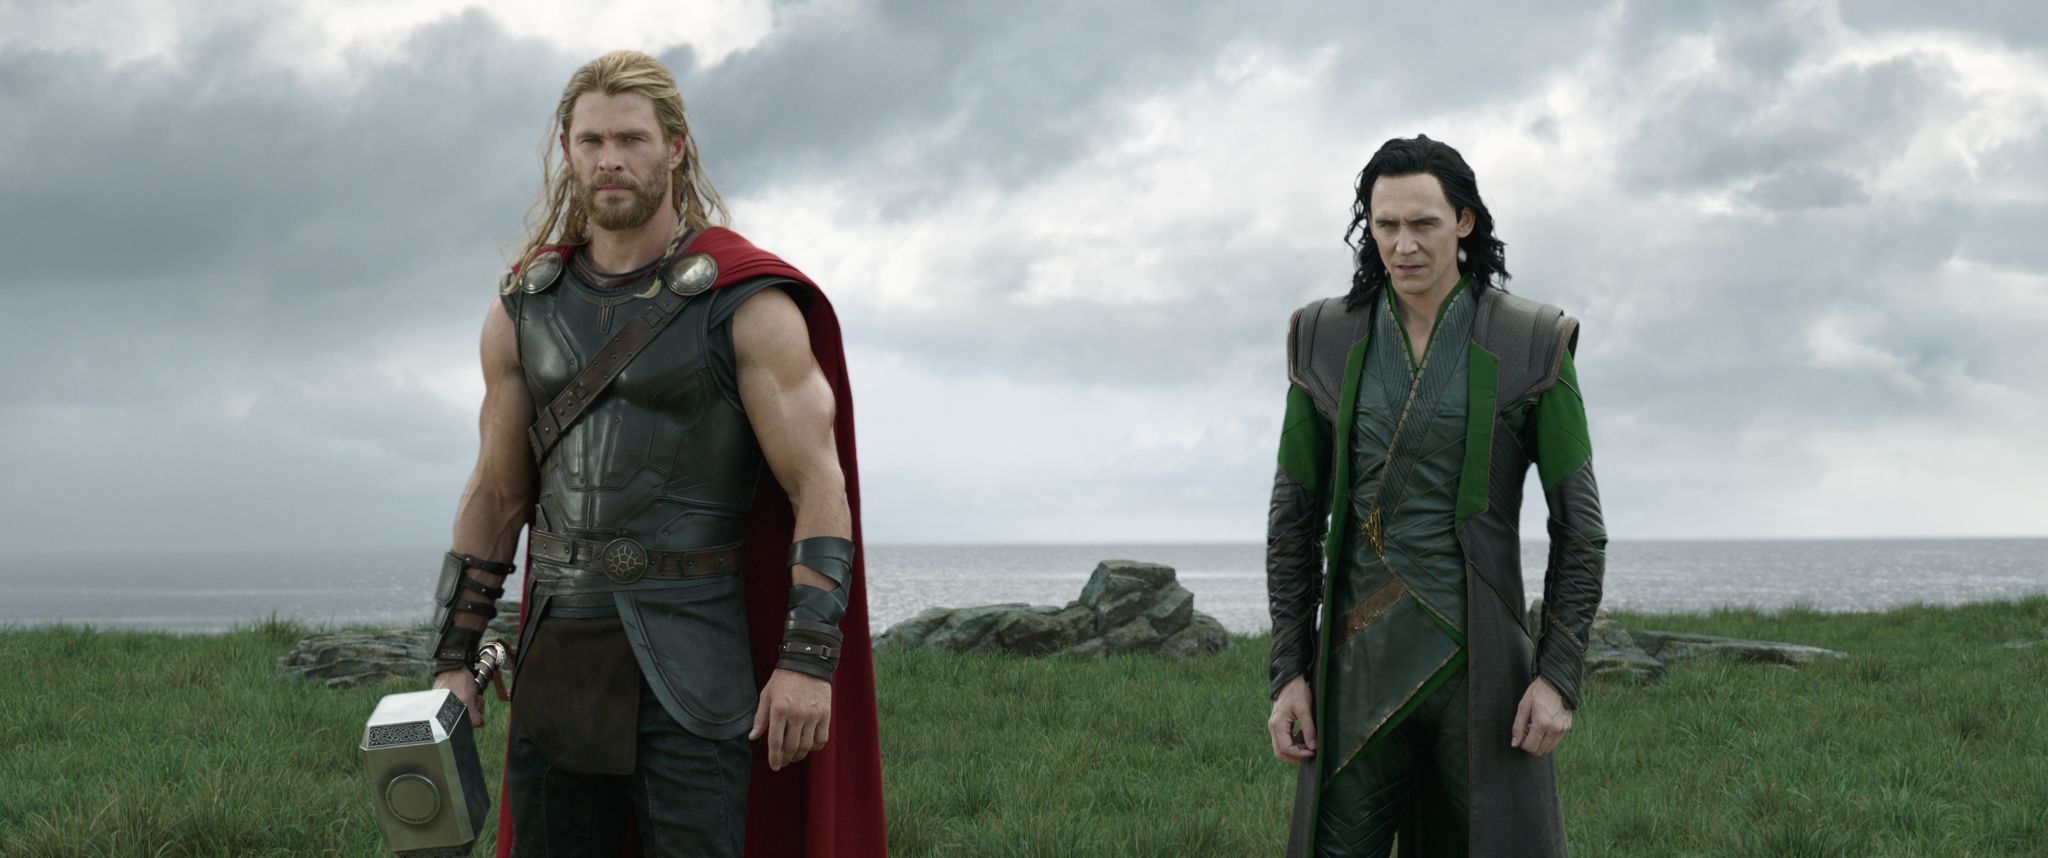 Thor: Ragnarok' review: Marvel flexes comedy muscles | CNN